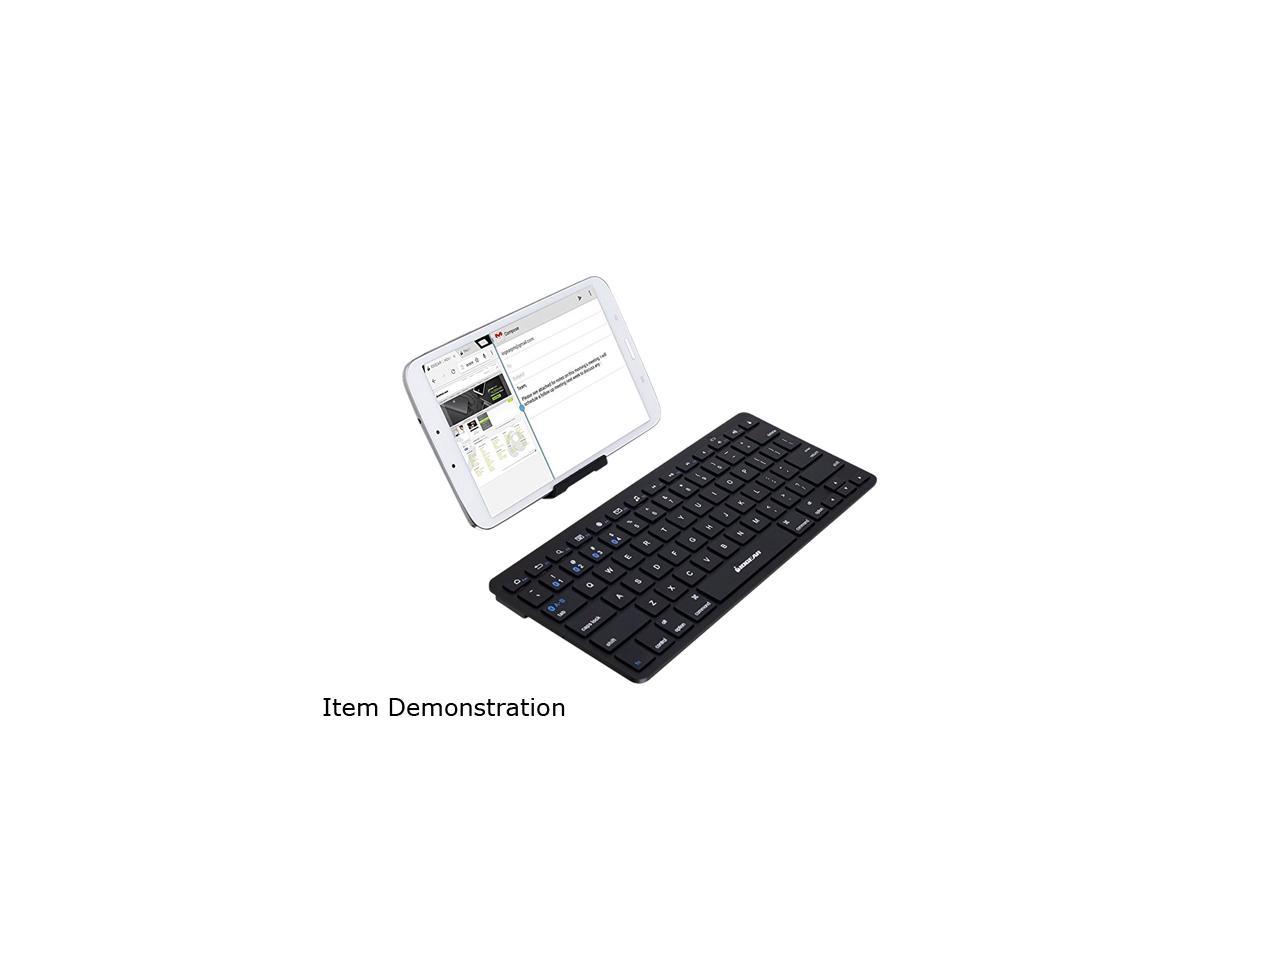 IOGEAR GKB632B Black Bluetooth Wireless Slim Keyboard